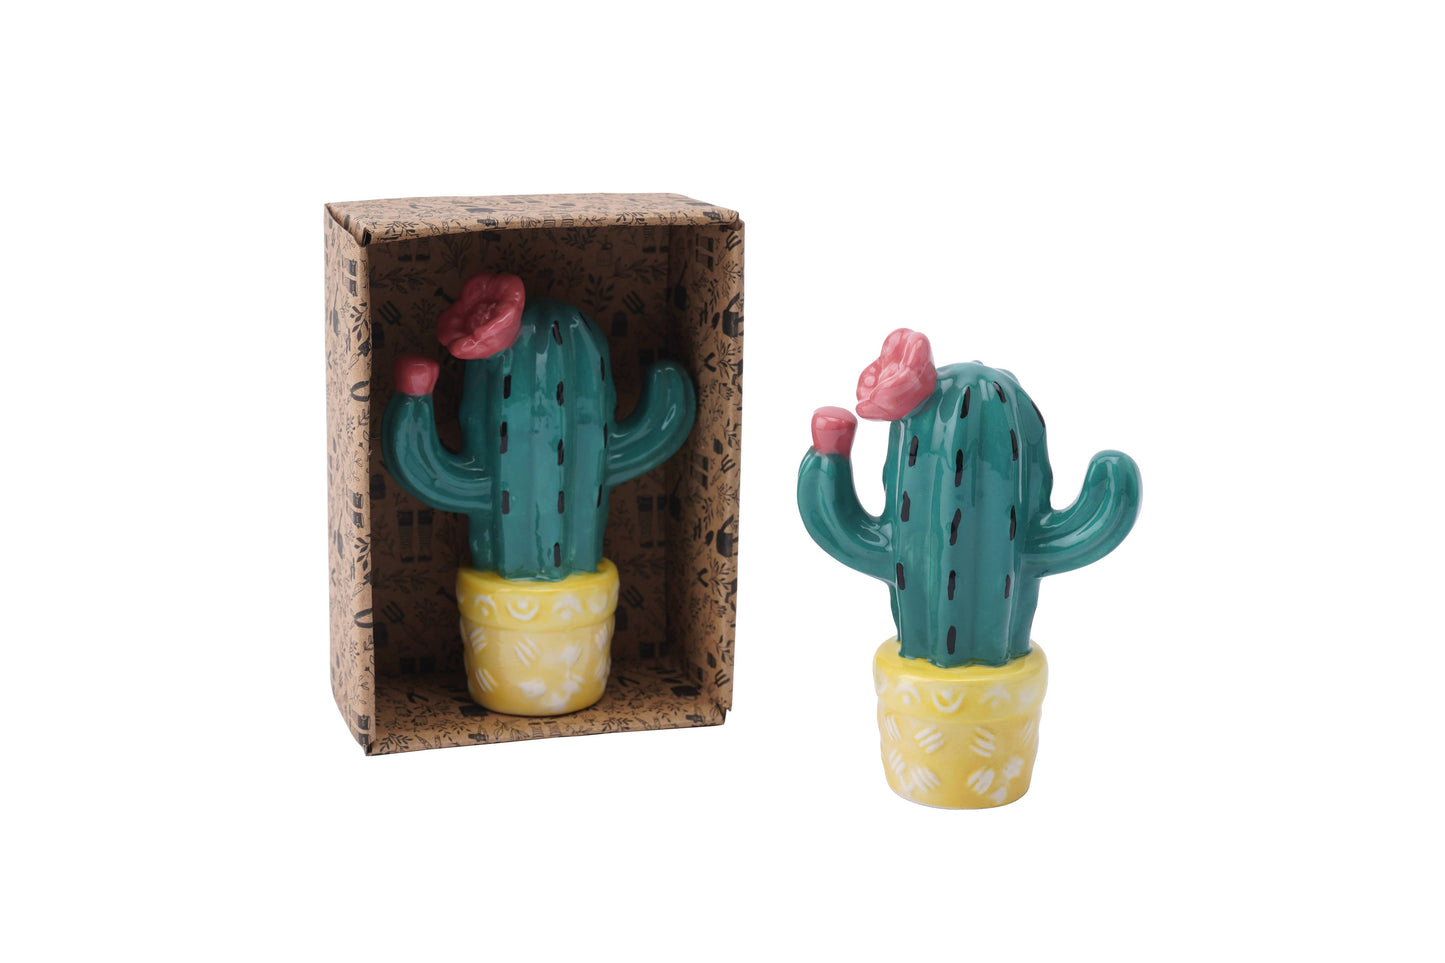 The Potting Shed Ceramic Cactus Ring Holder